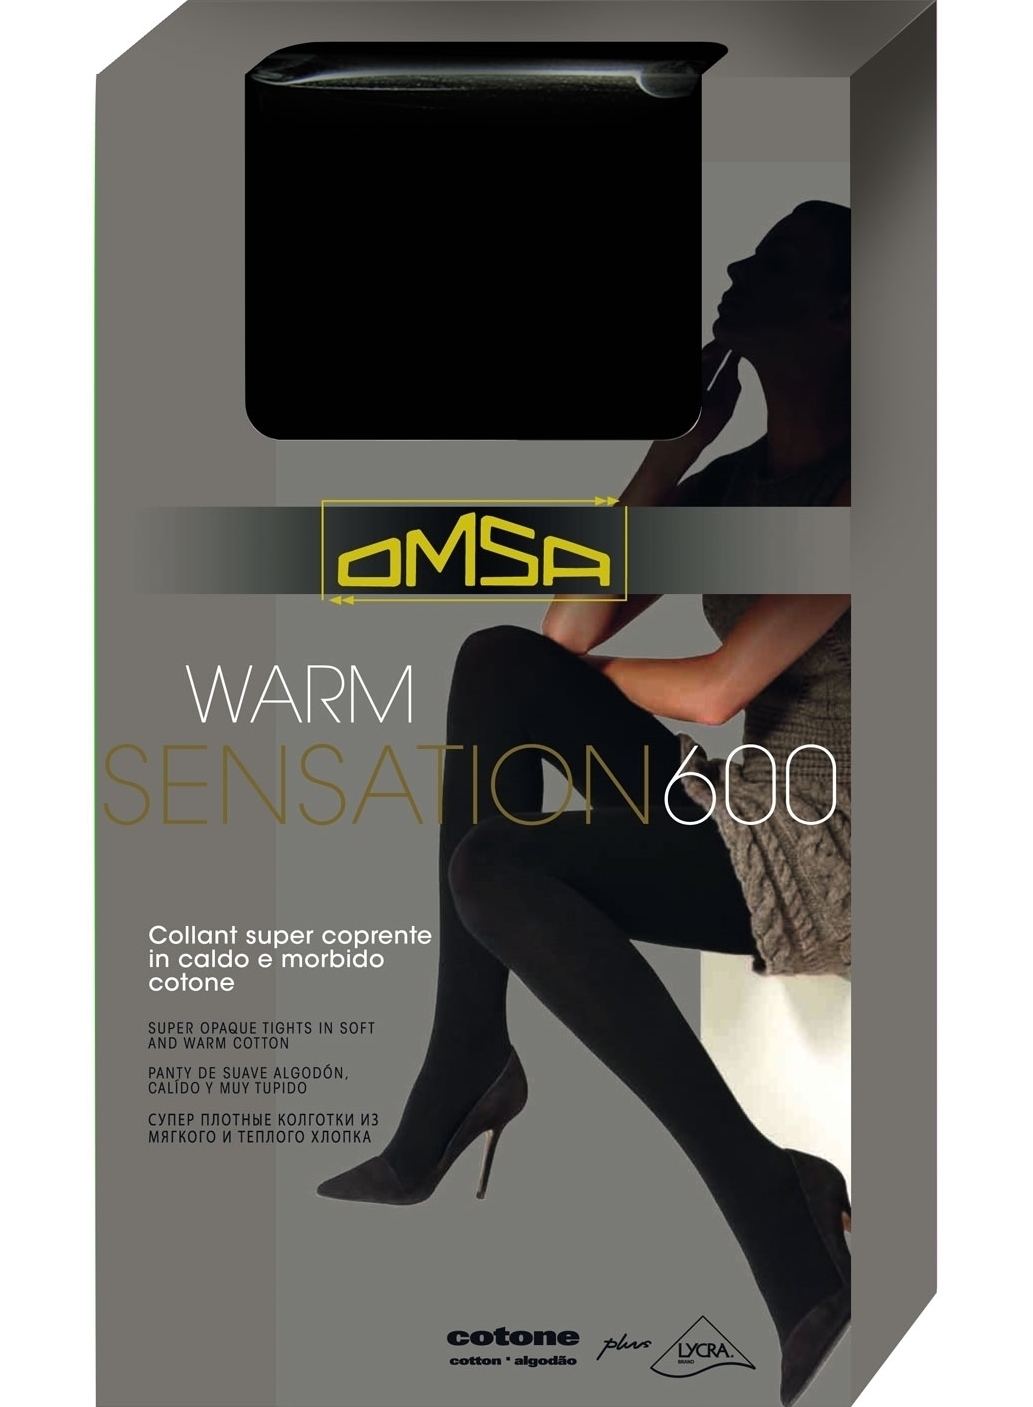 OMSA Warm Sensation 600